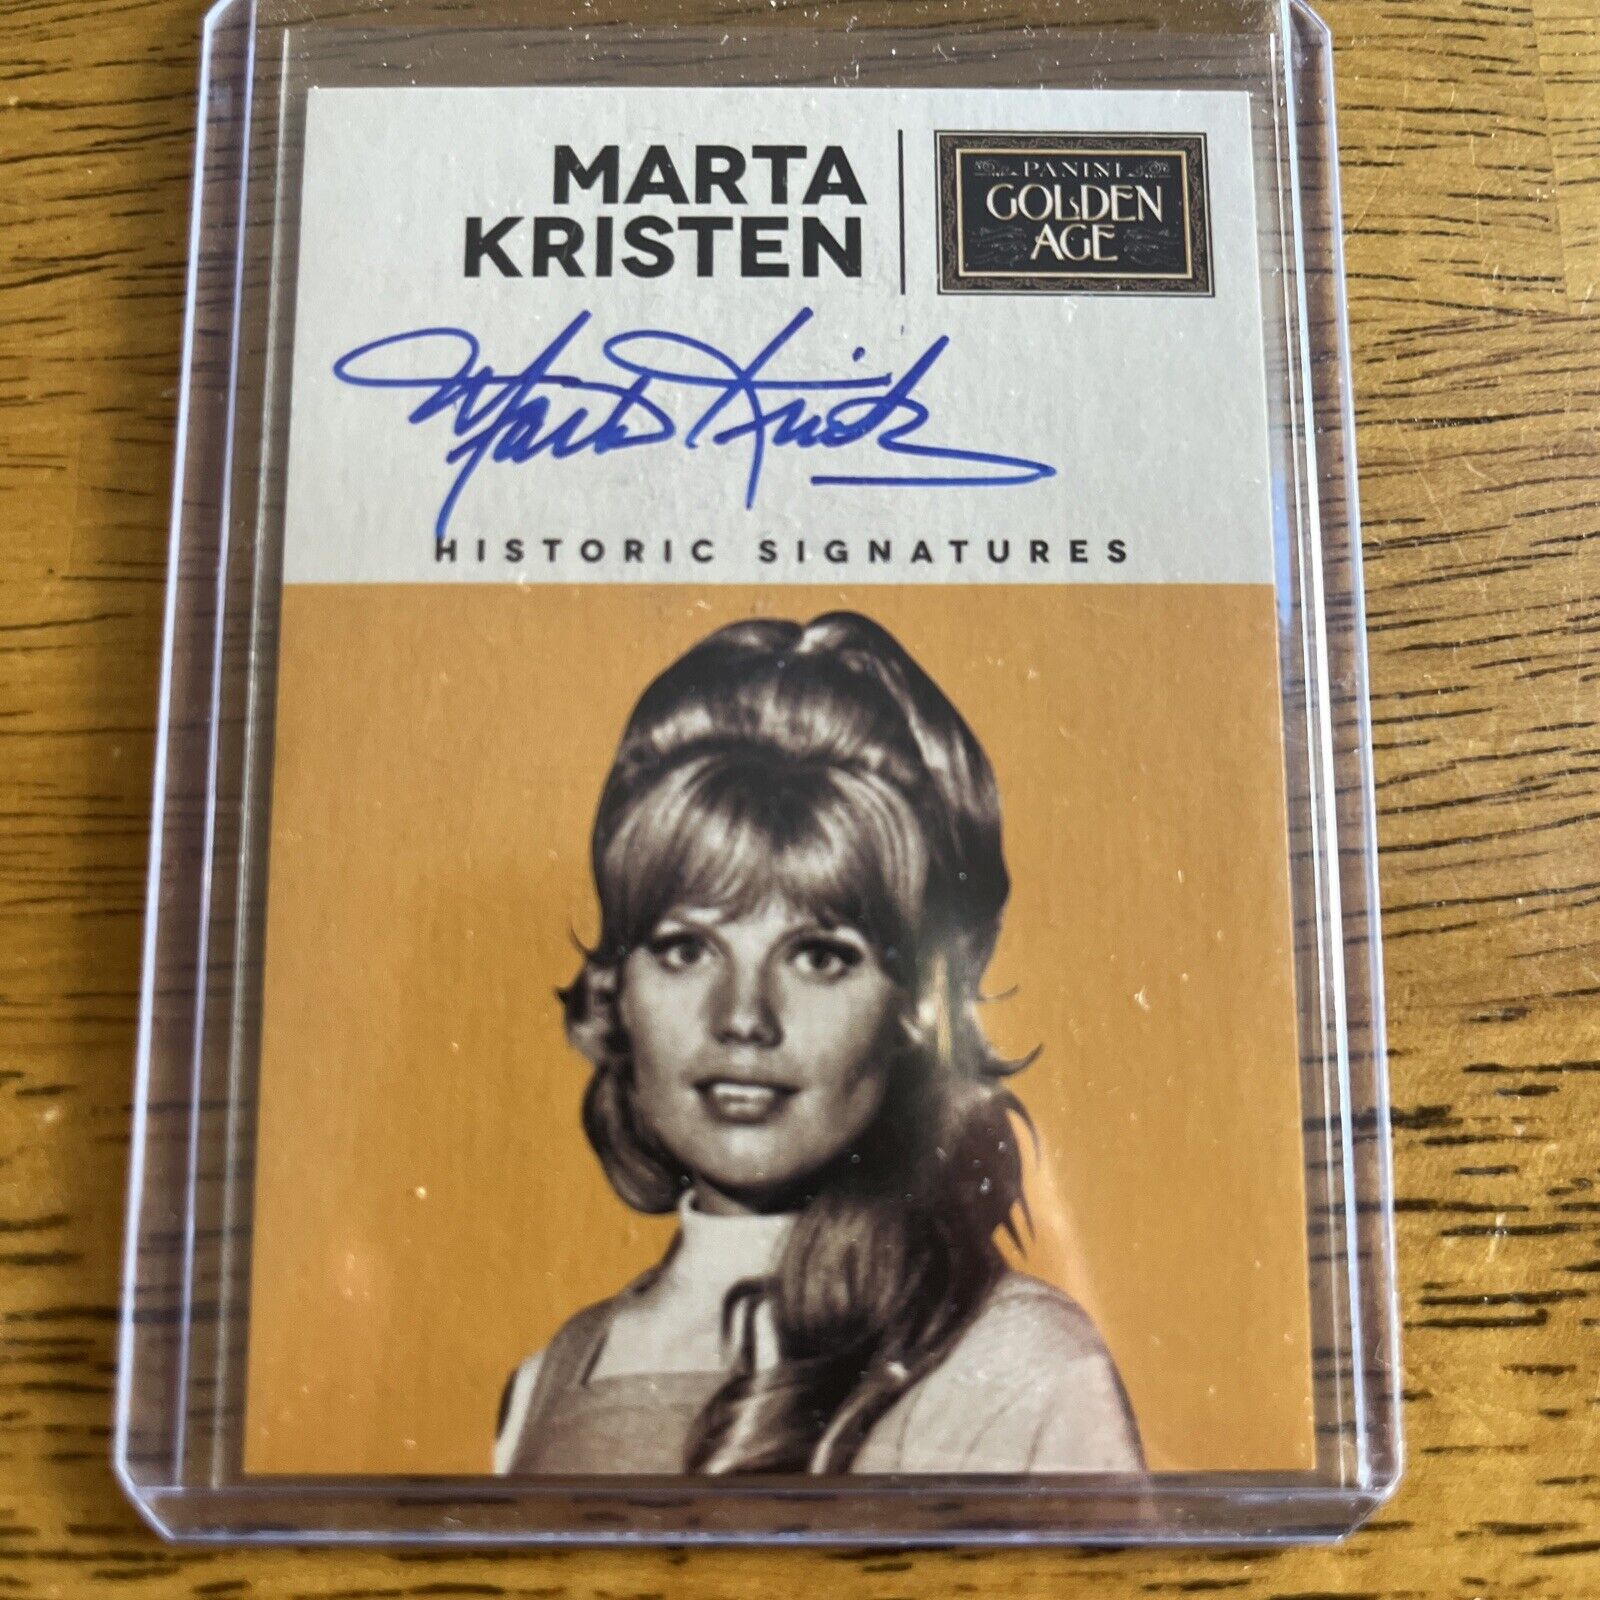 2014 Panini Golden Age Marta Kristen Auto Autograph Historic Signatures